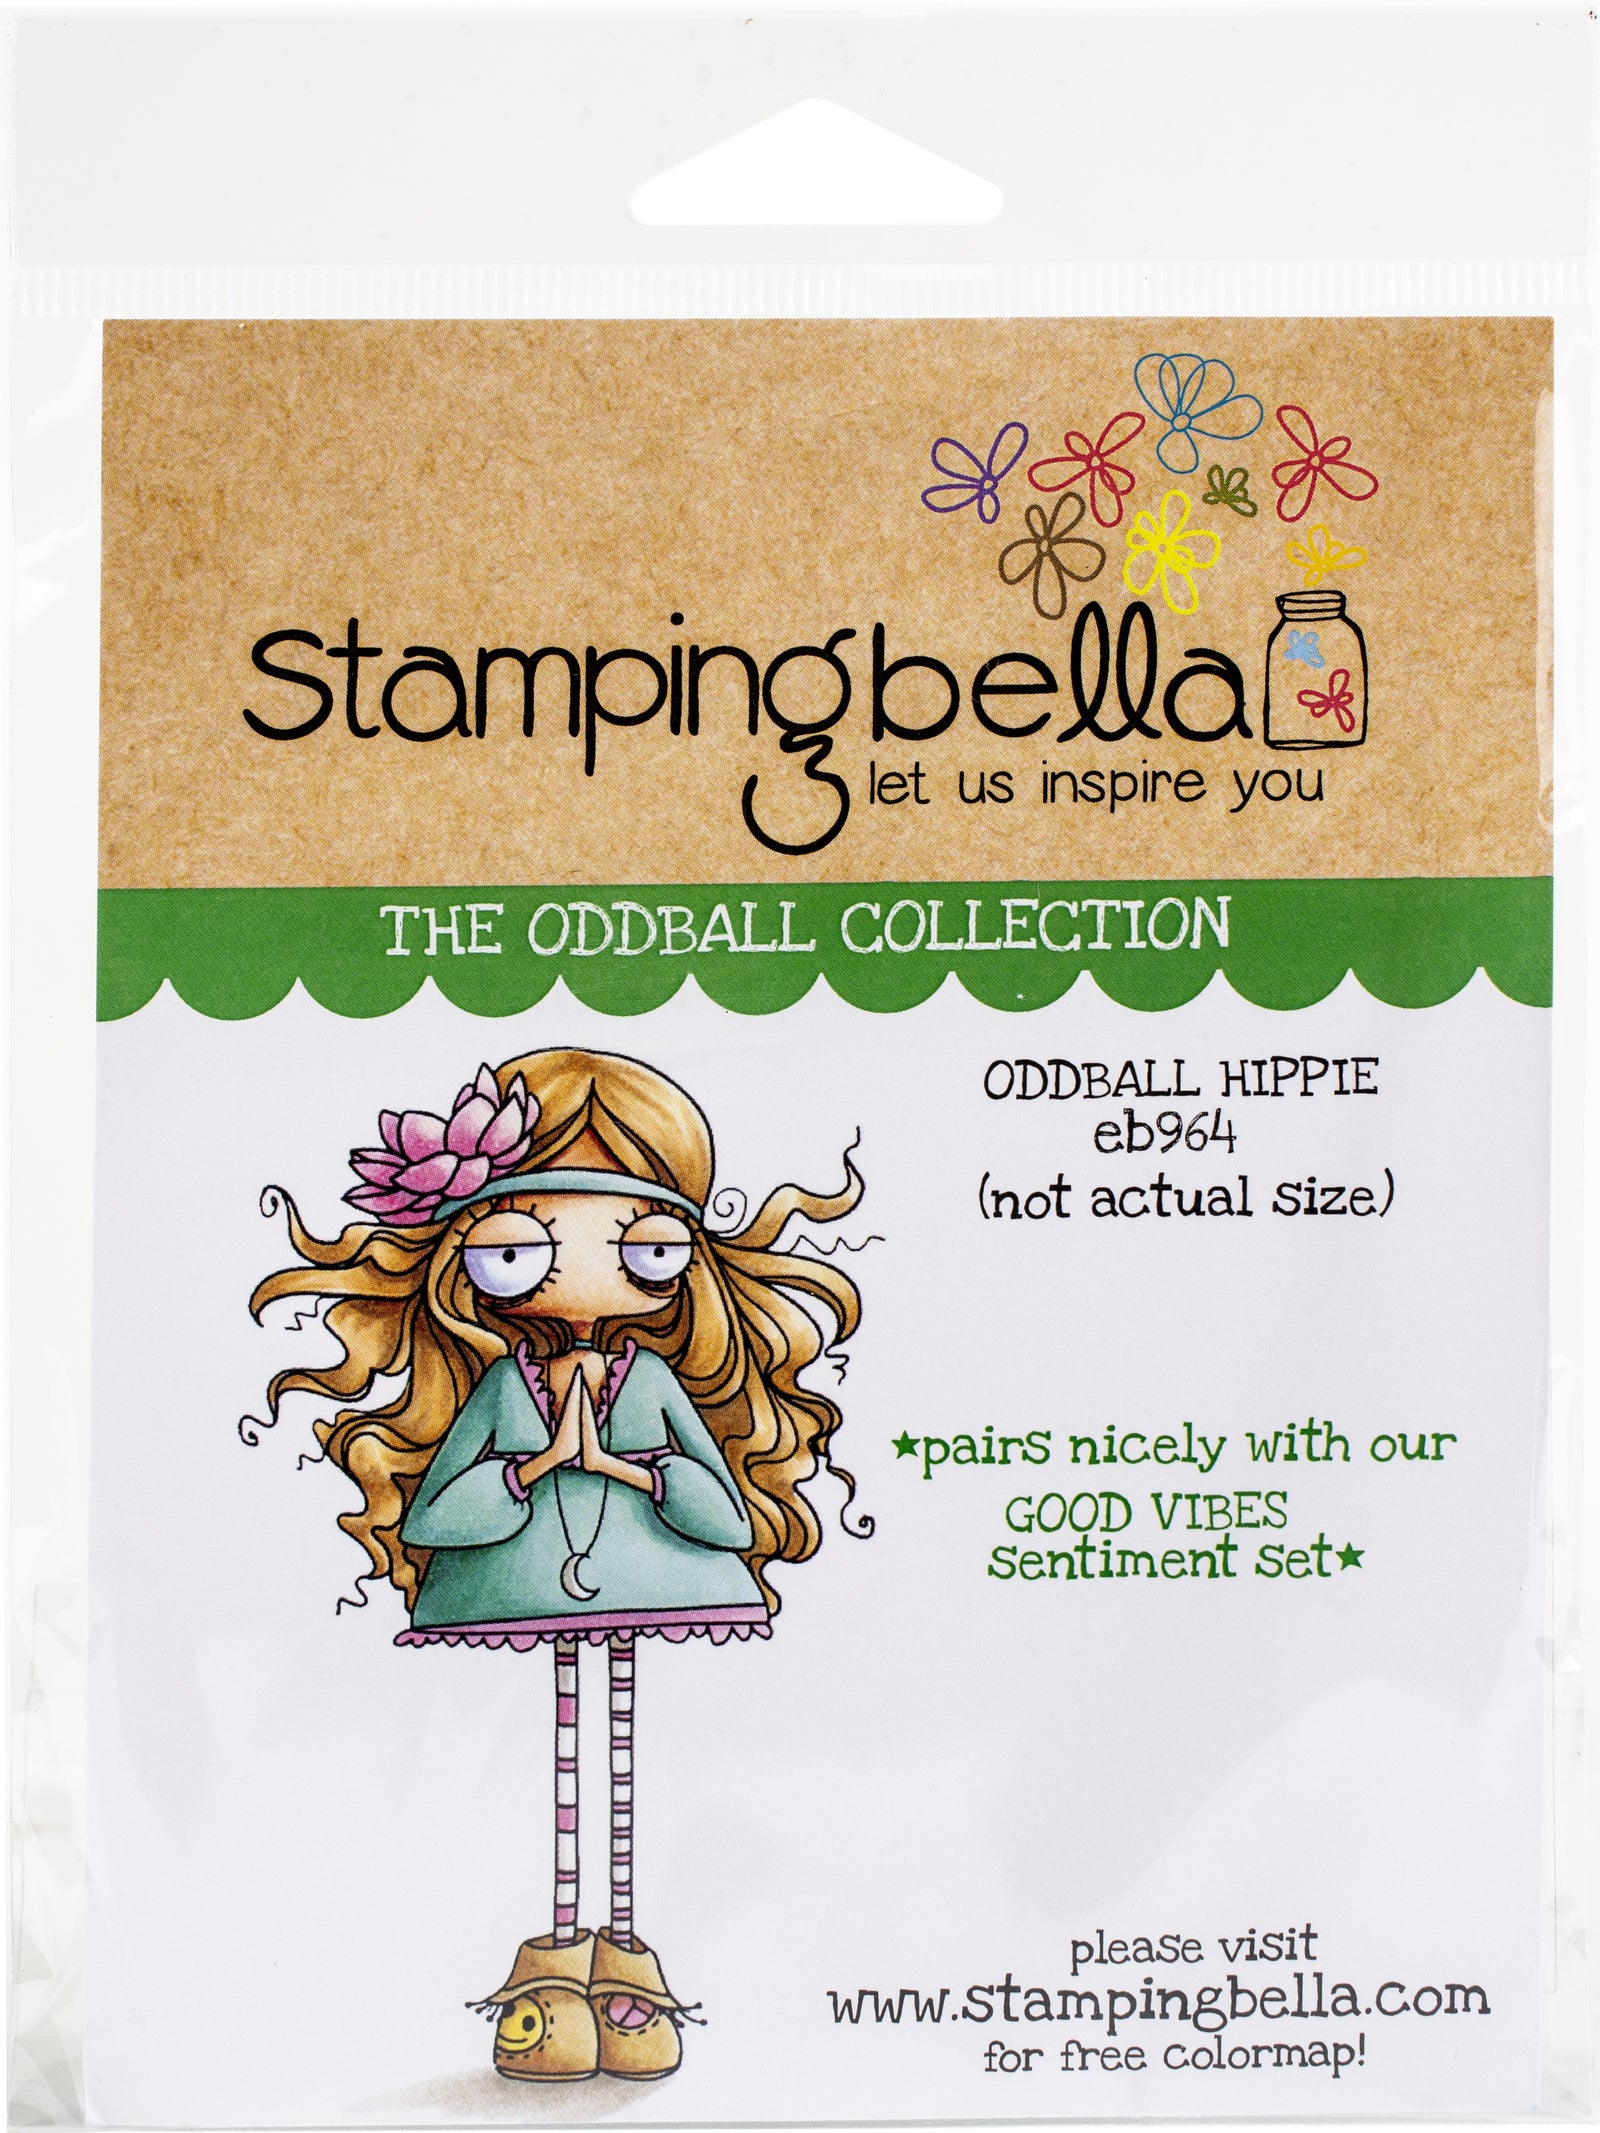 Oddball Hippie - Rubber Stamp - Stamping Bella